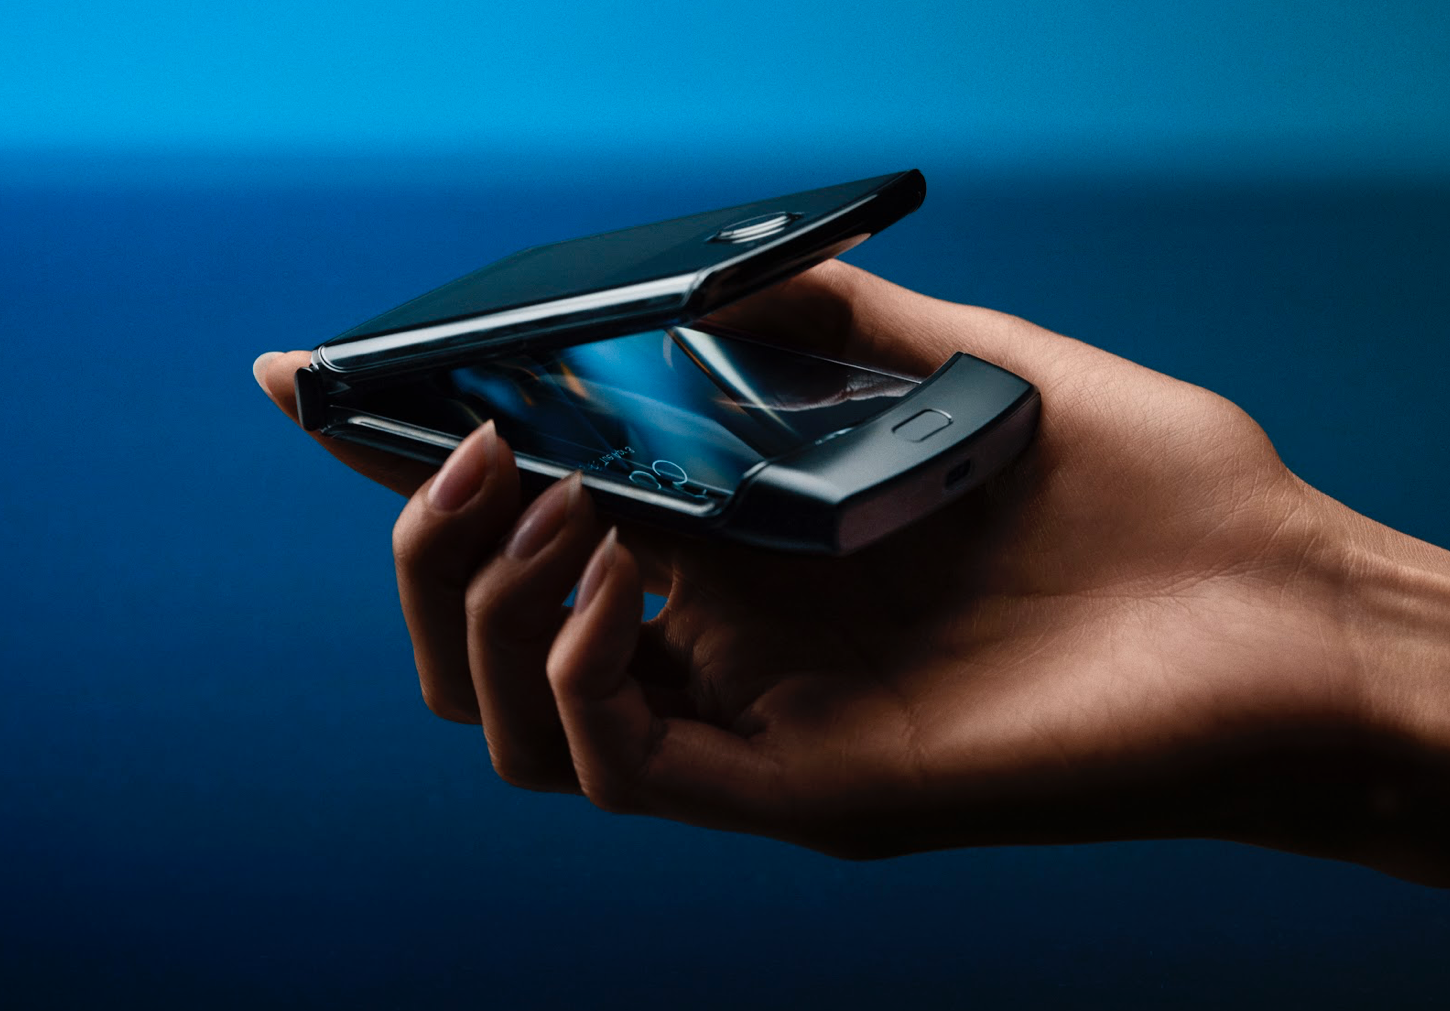 Motorola Razr Flip Phone Returns with Bendy Screen—Specs, Price and